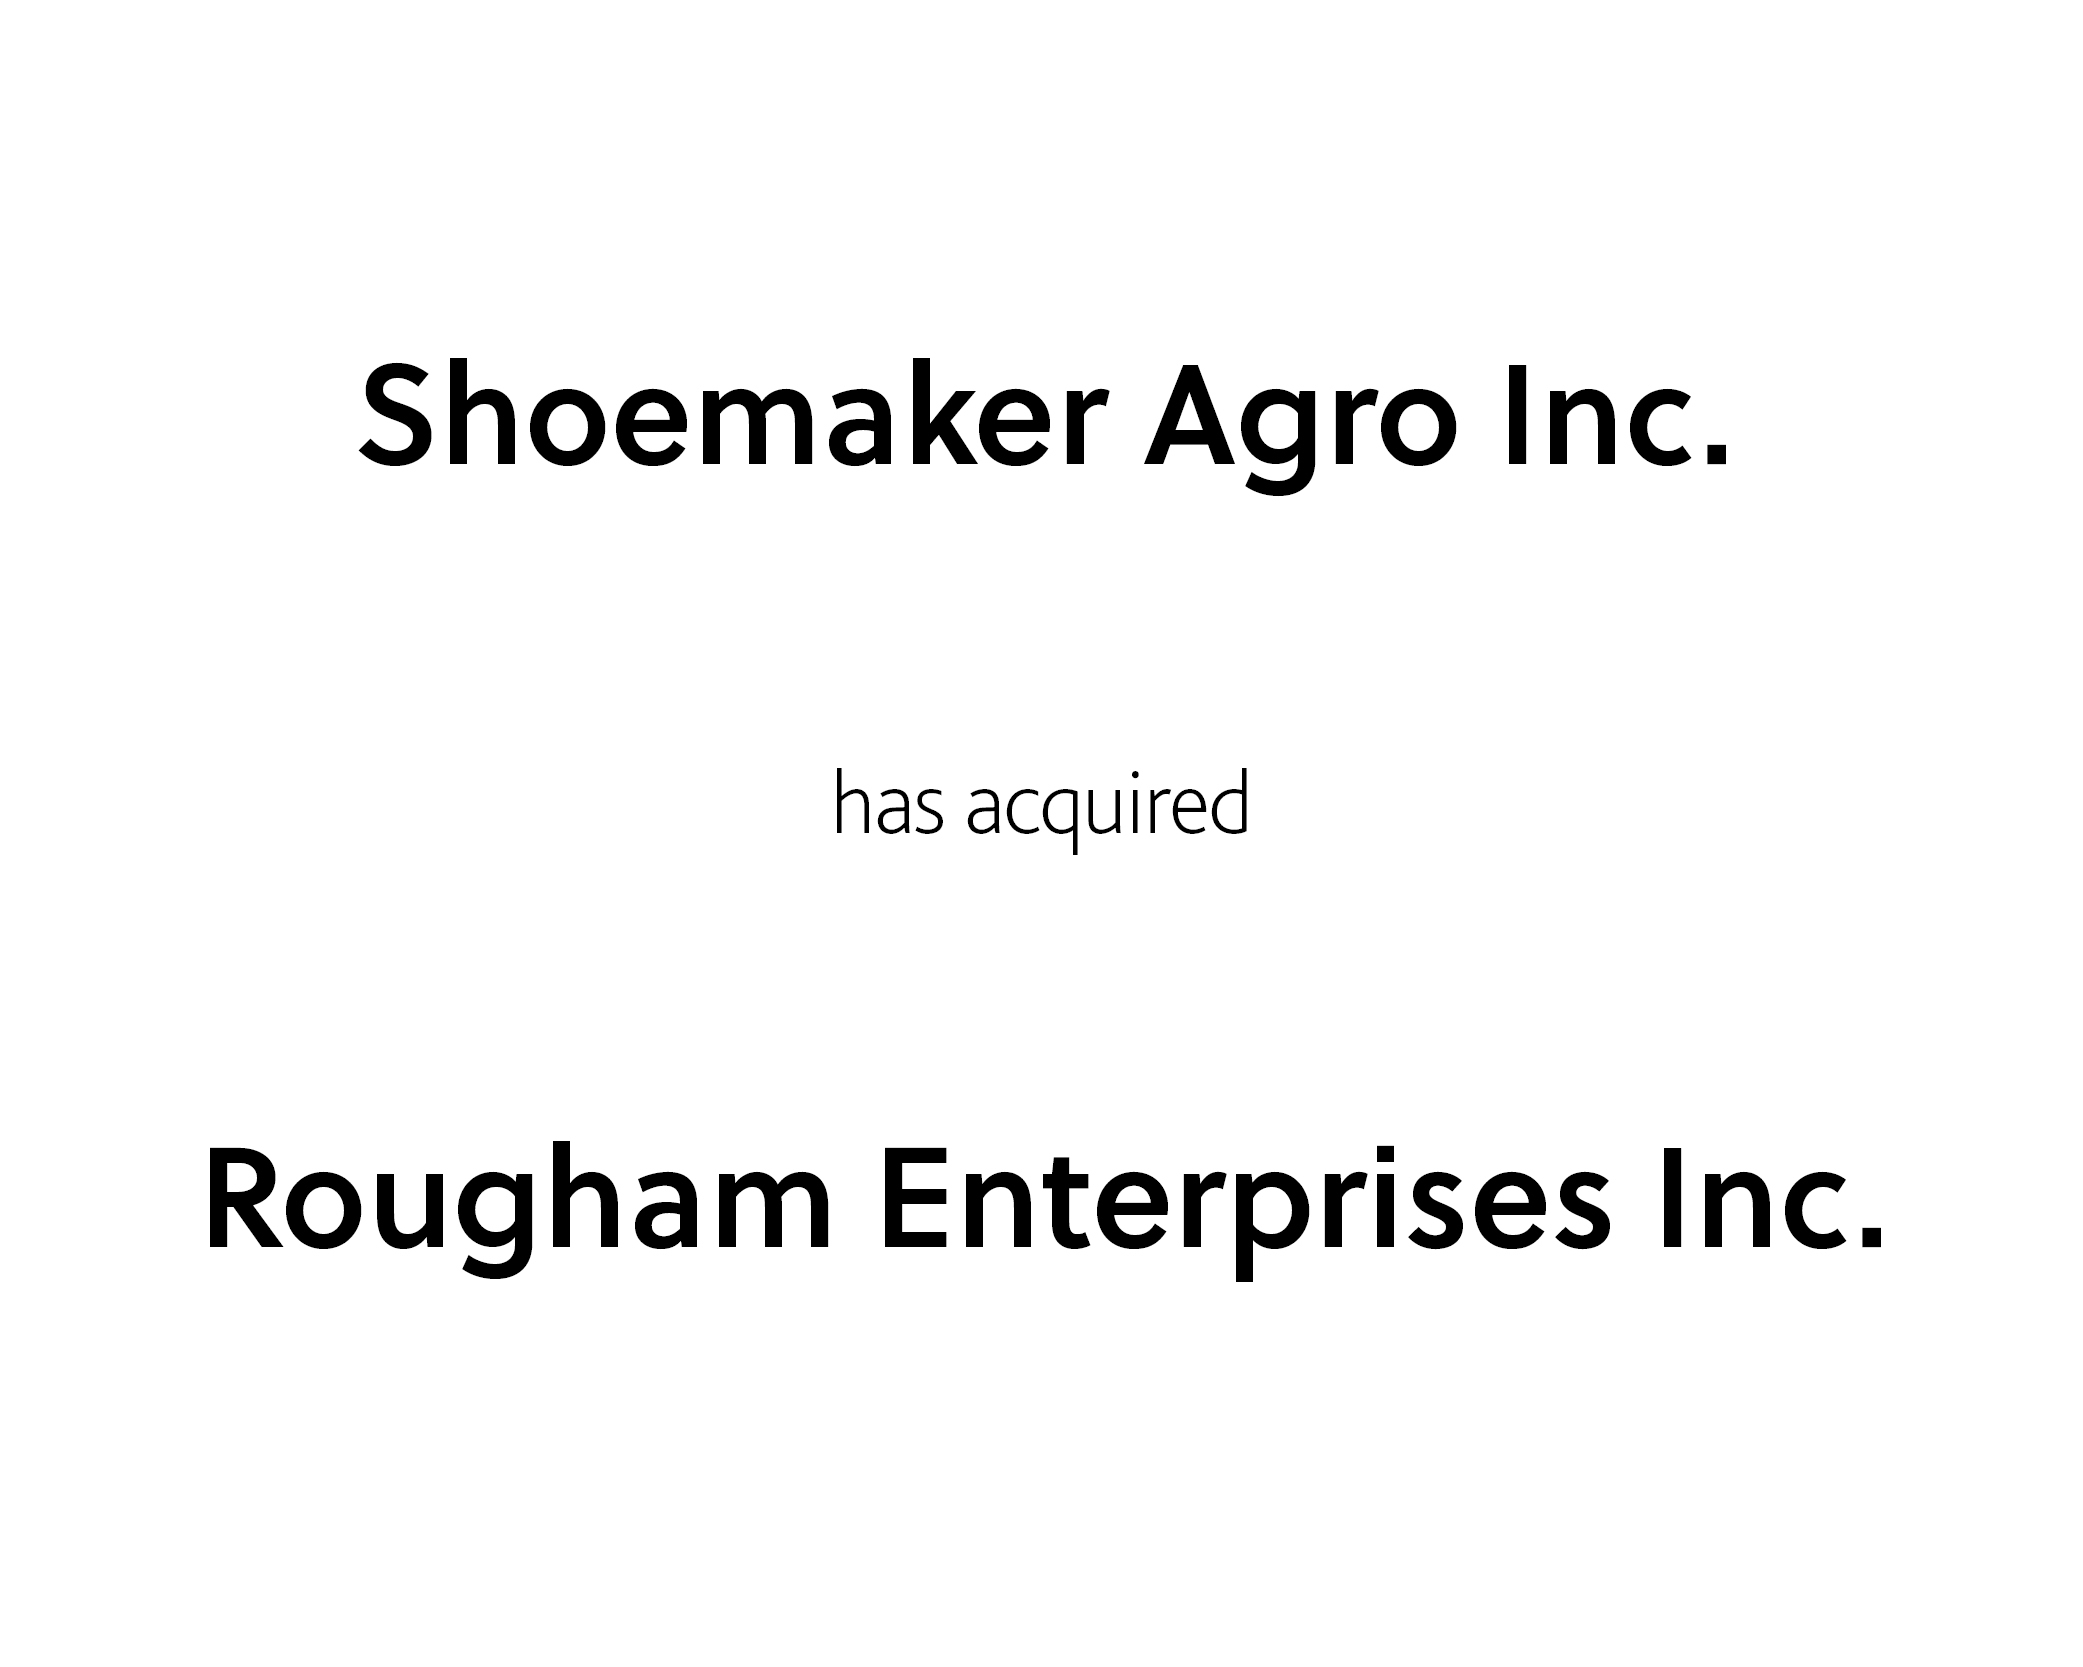 Shoemaker Agro Inc. has acquired Rougham Enterprises Inc.